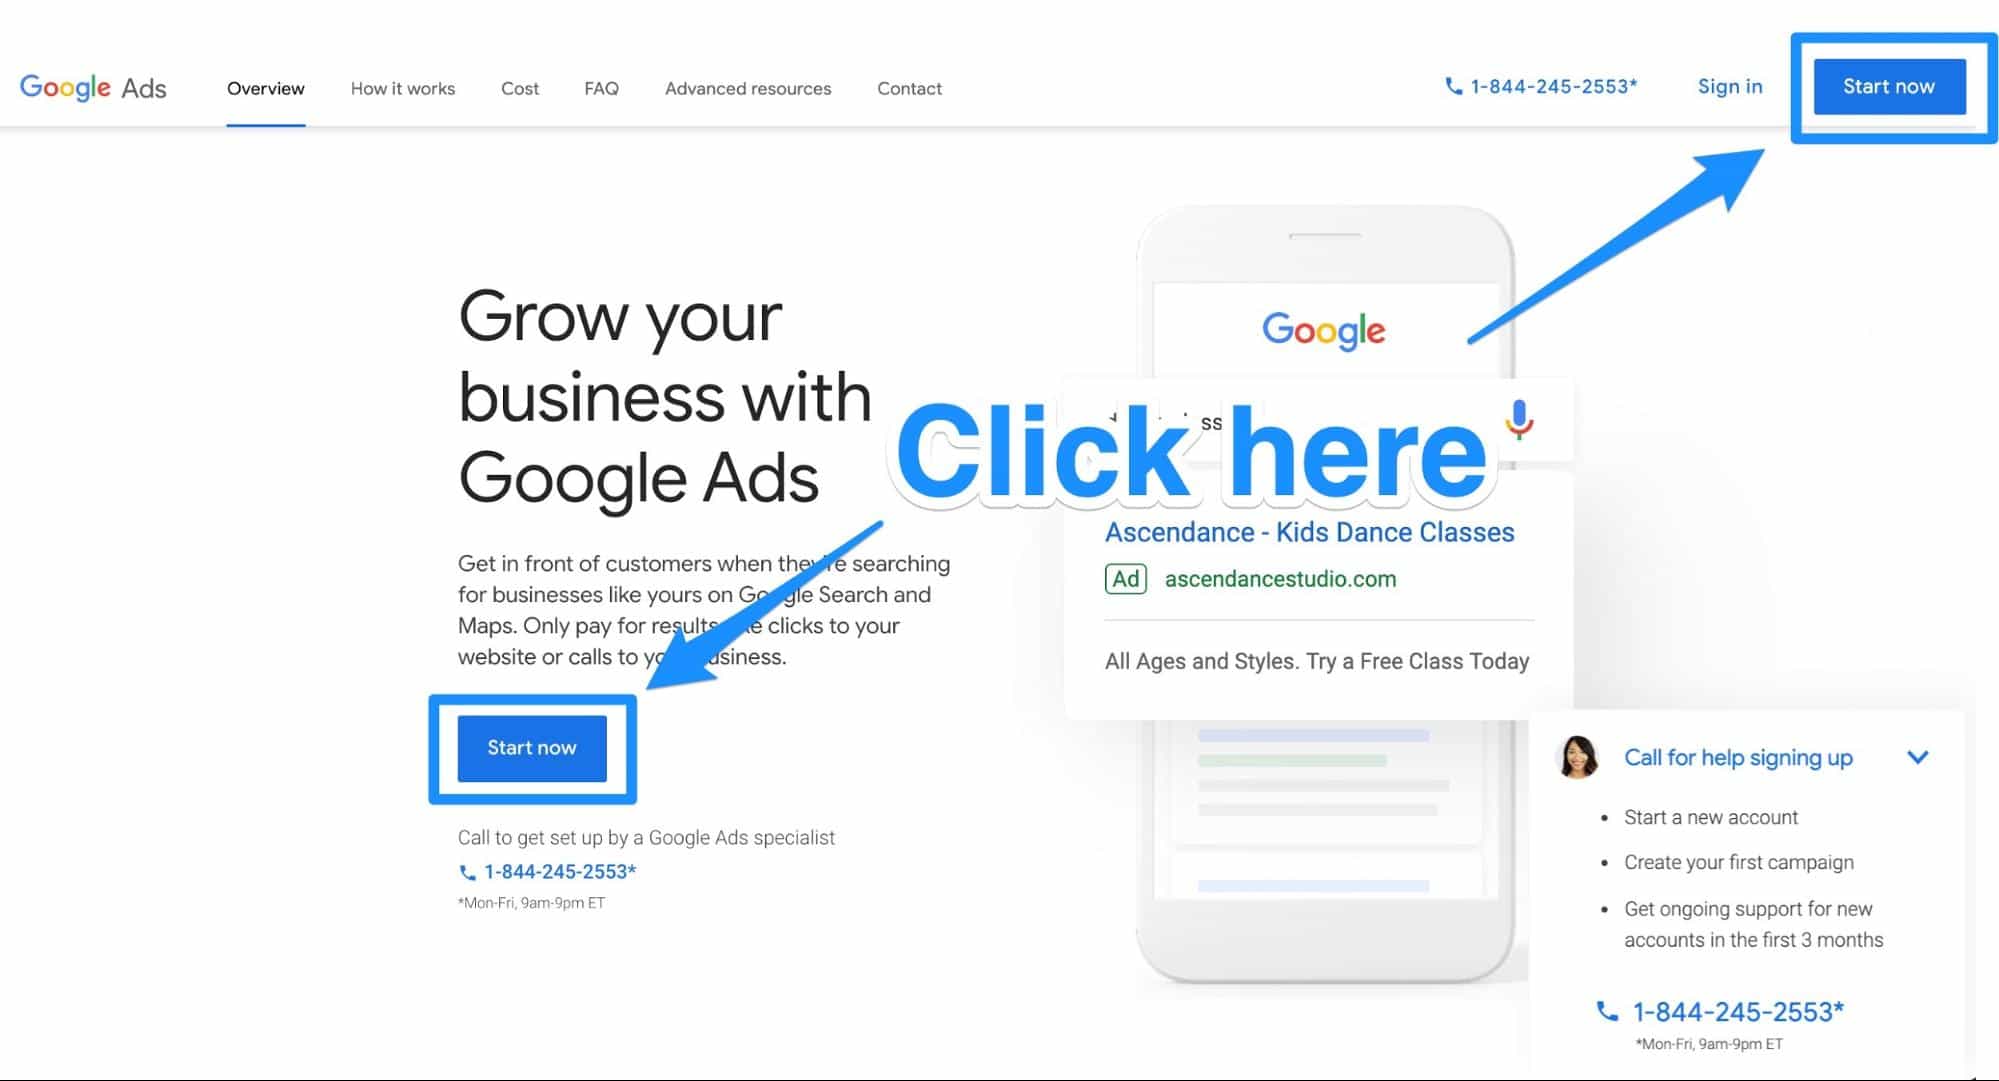 Google Ads homepage Start Now button